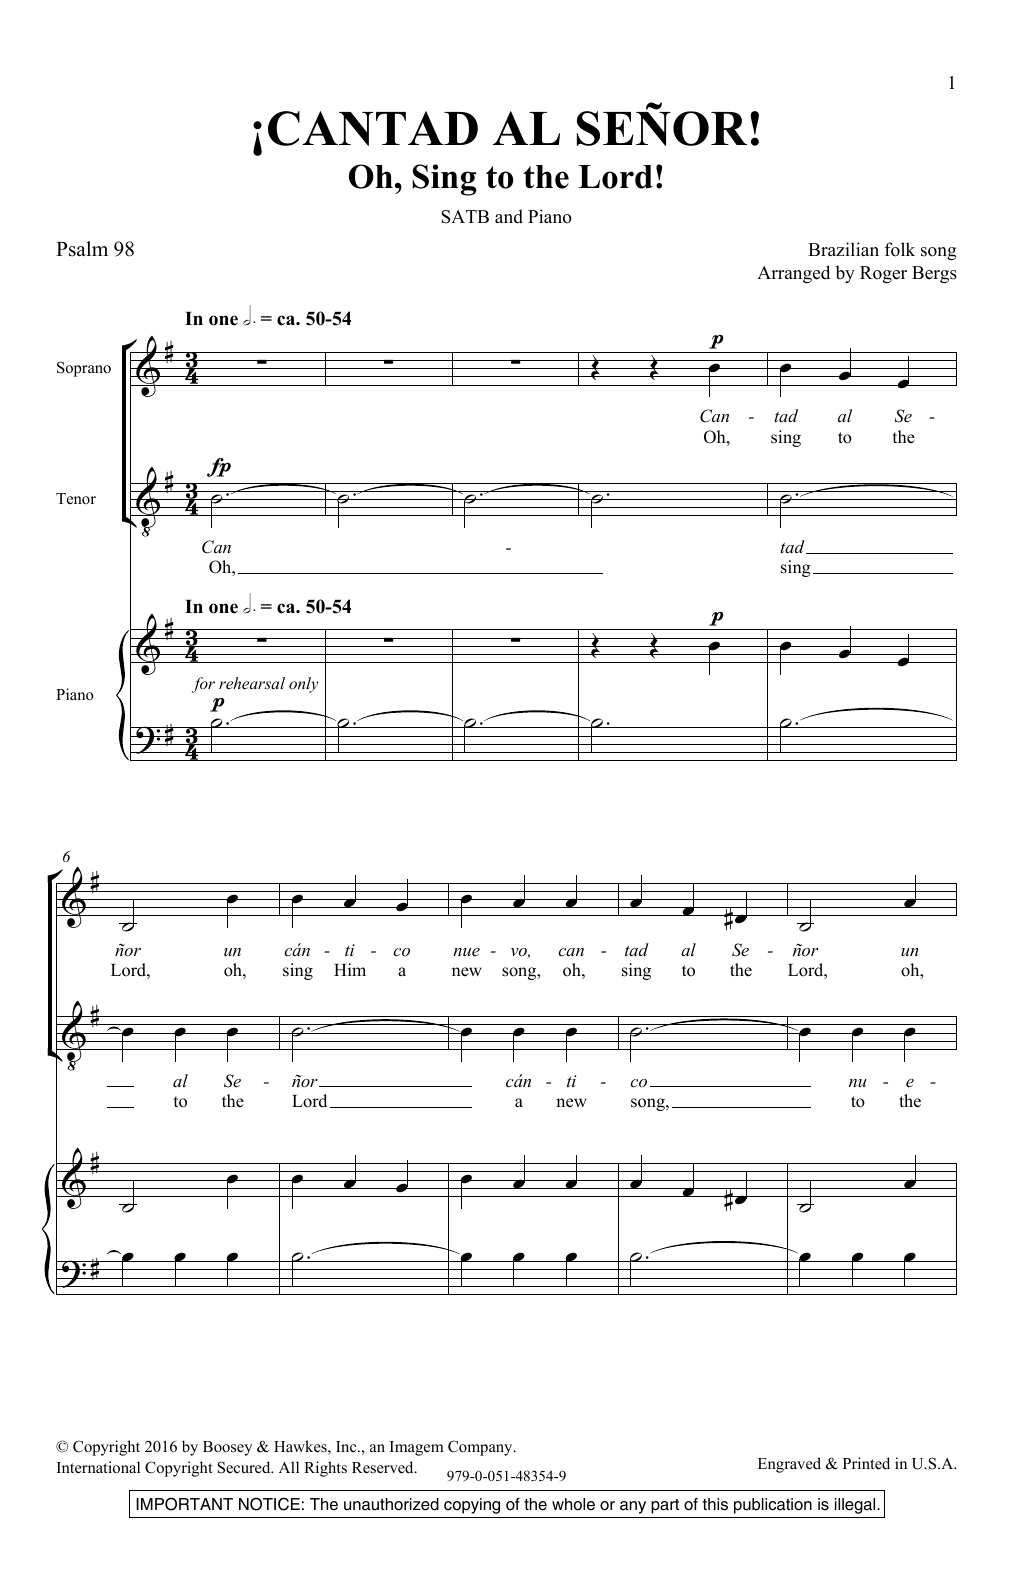 Roger Bergs Cantad Al Senor Sheet Music Notes & Chords for SATB - Download or Print PDF